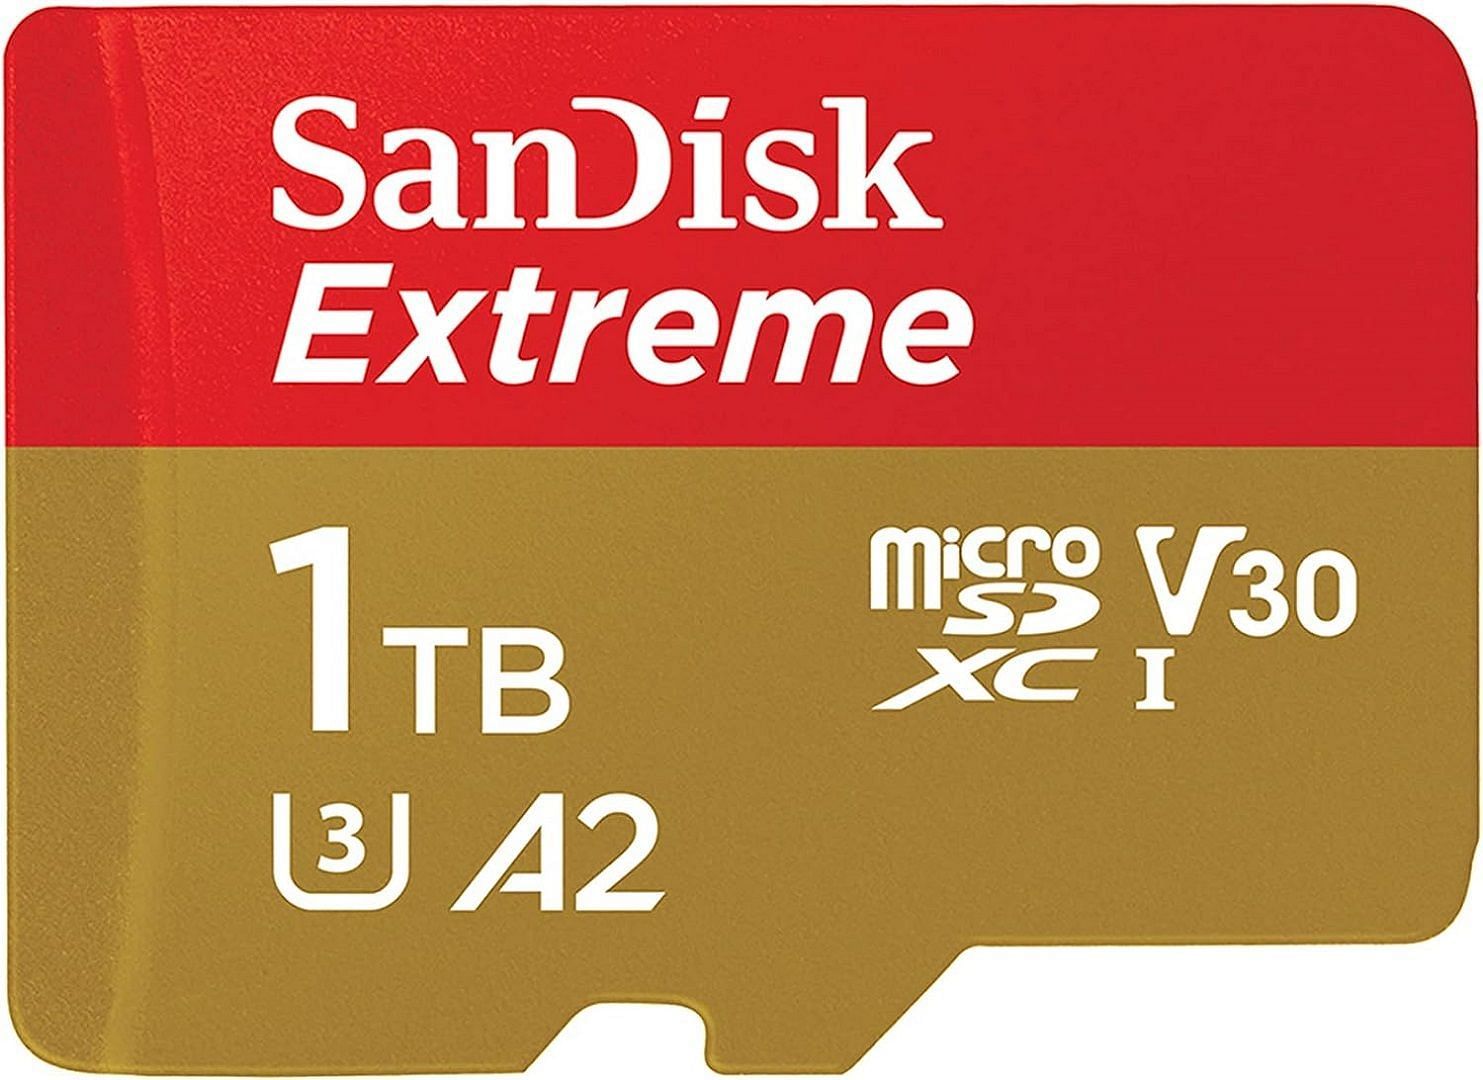 The SanDisk 1TB Extreme microSDXC Memory Card (Image via SanDisk)